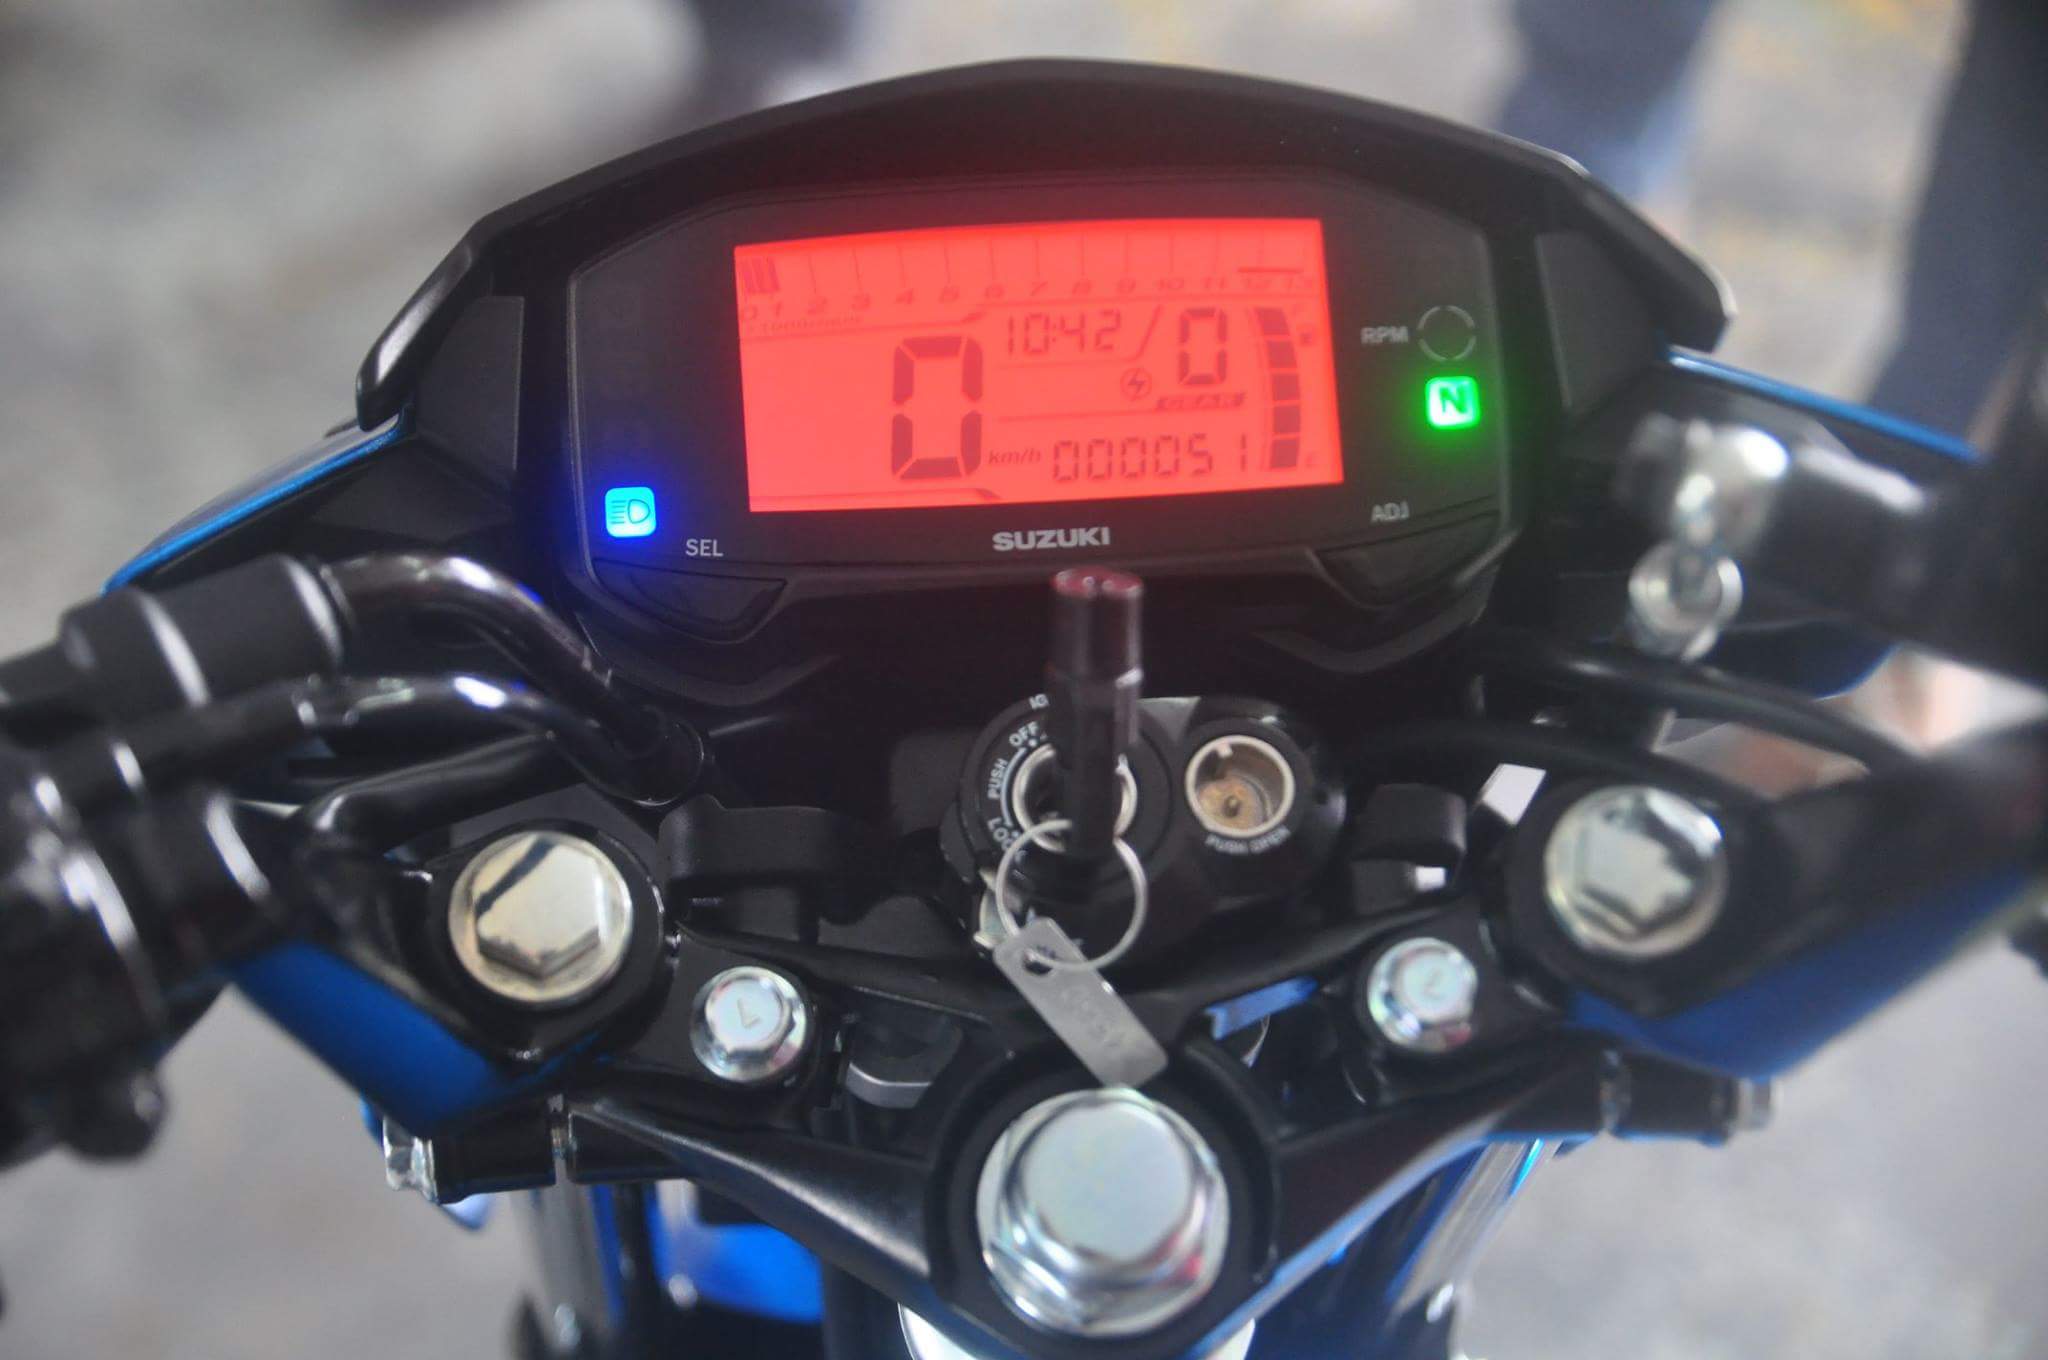 Mengenal Panel Speedometer All New Satria F150 Injeksi Tahun 2016